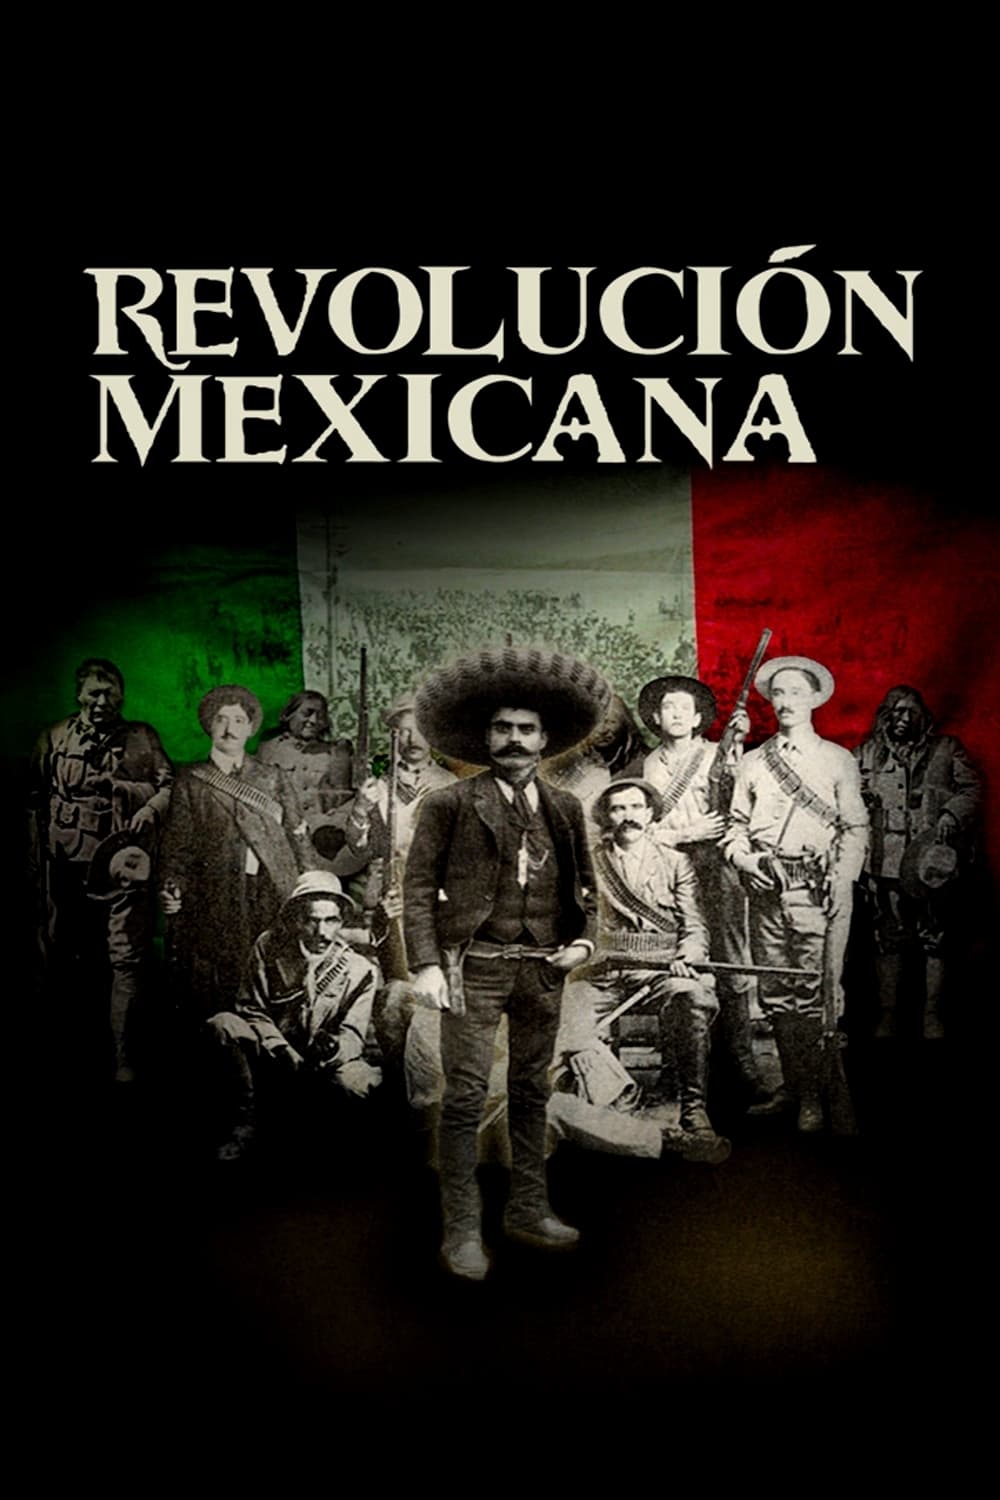 Mexican Revolution